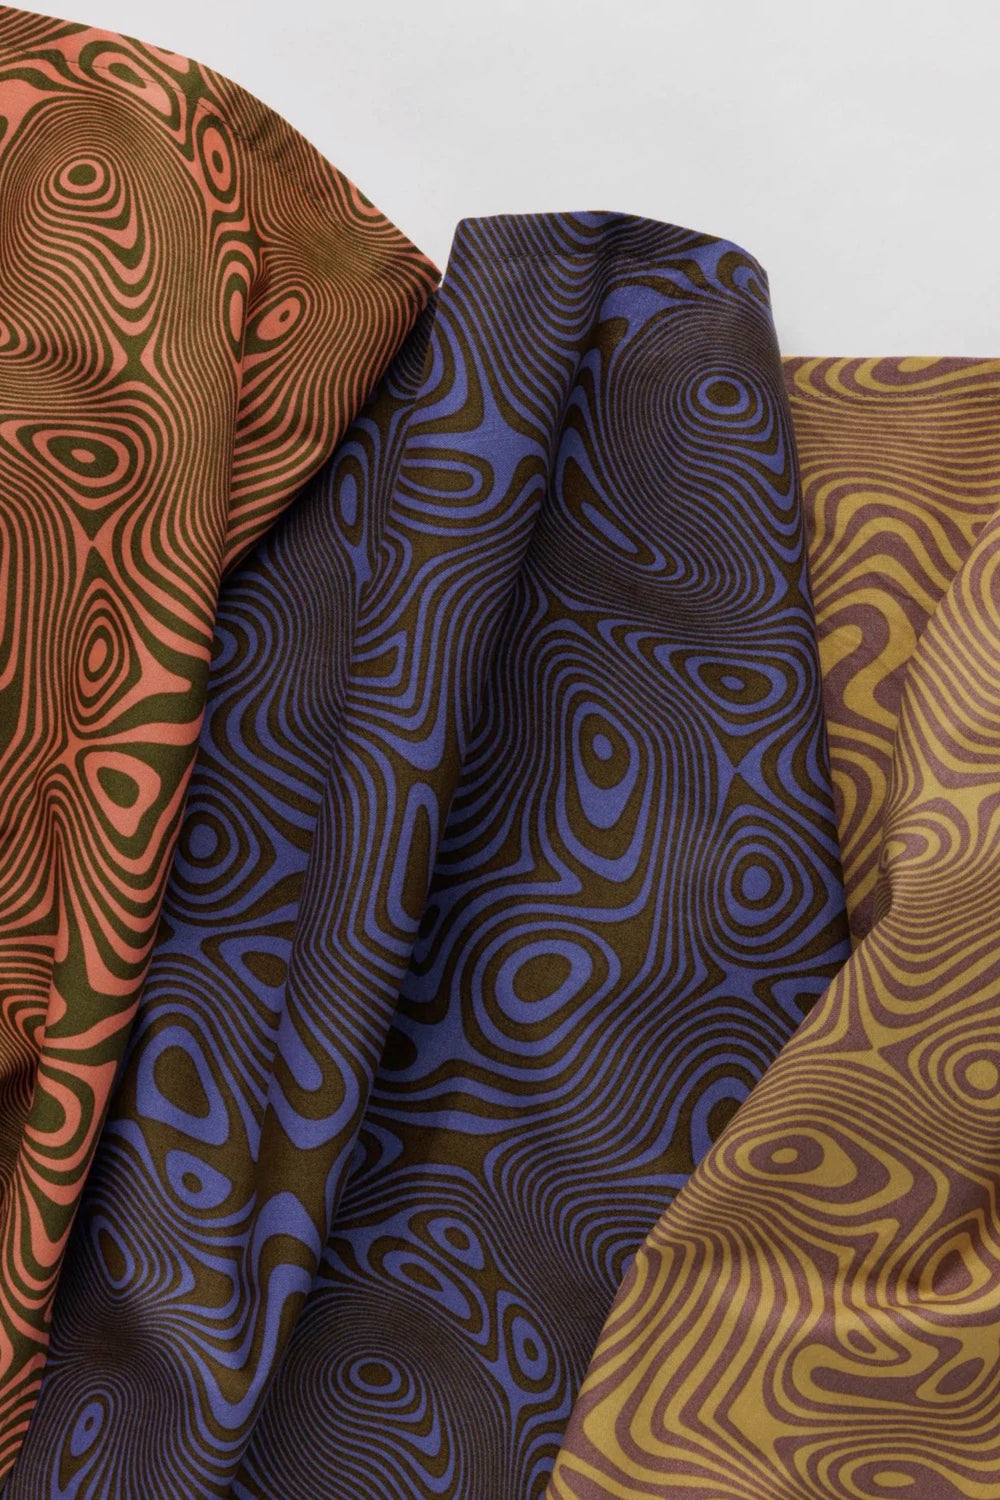 Trippy Swirl Reusable Cloth Set